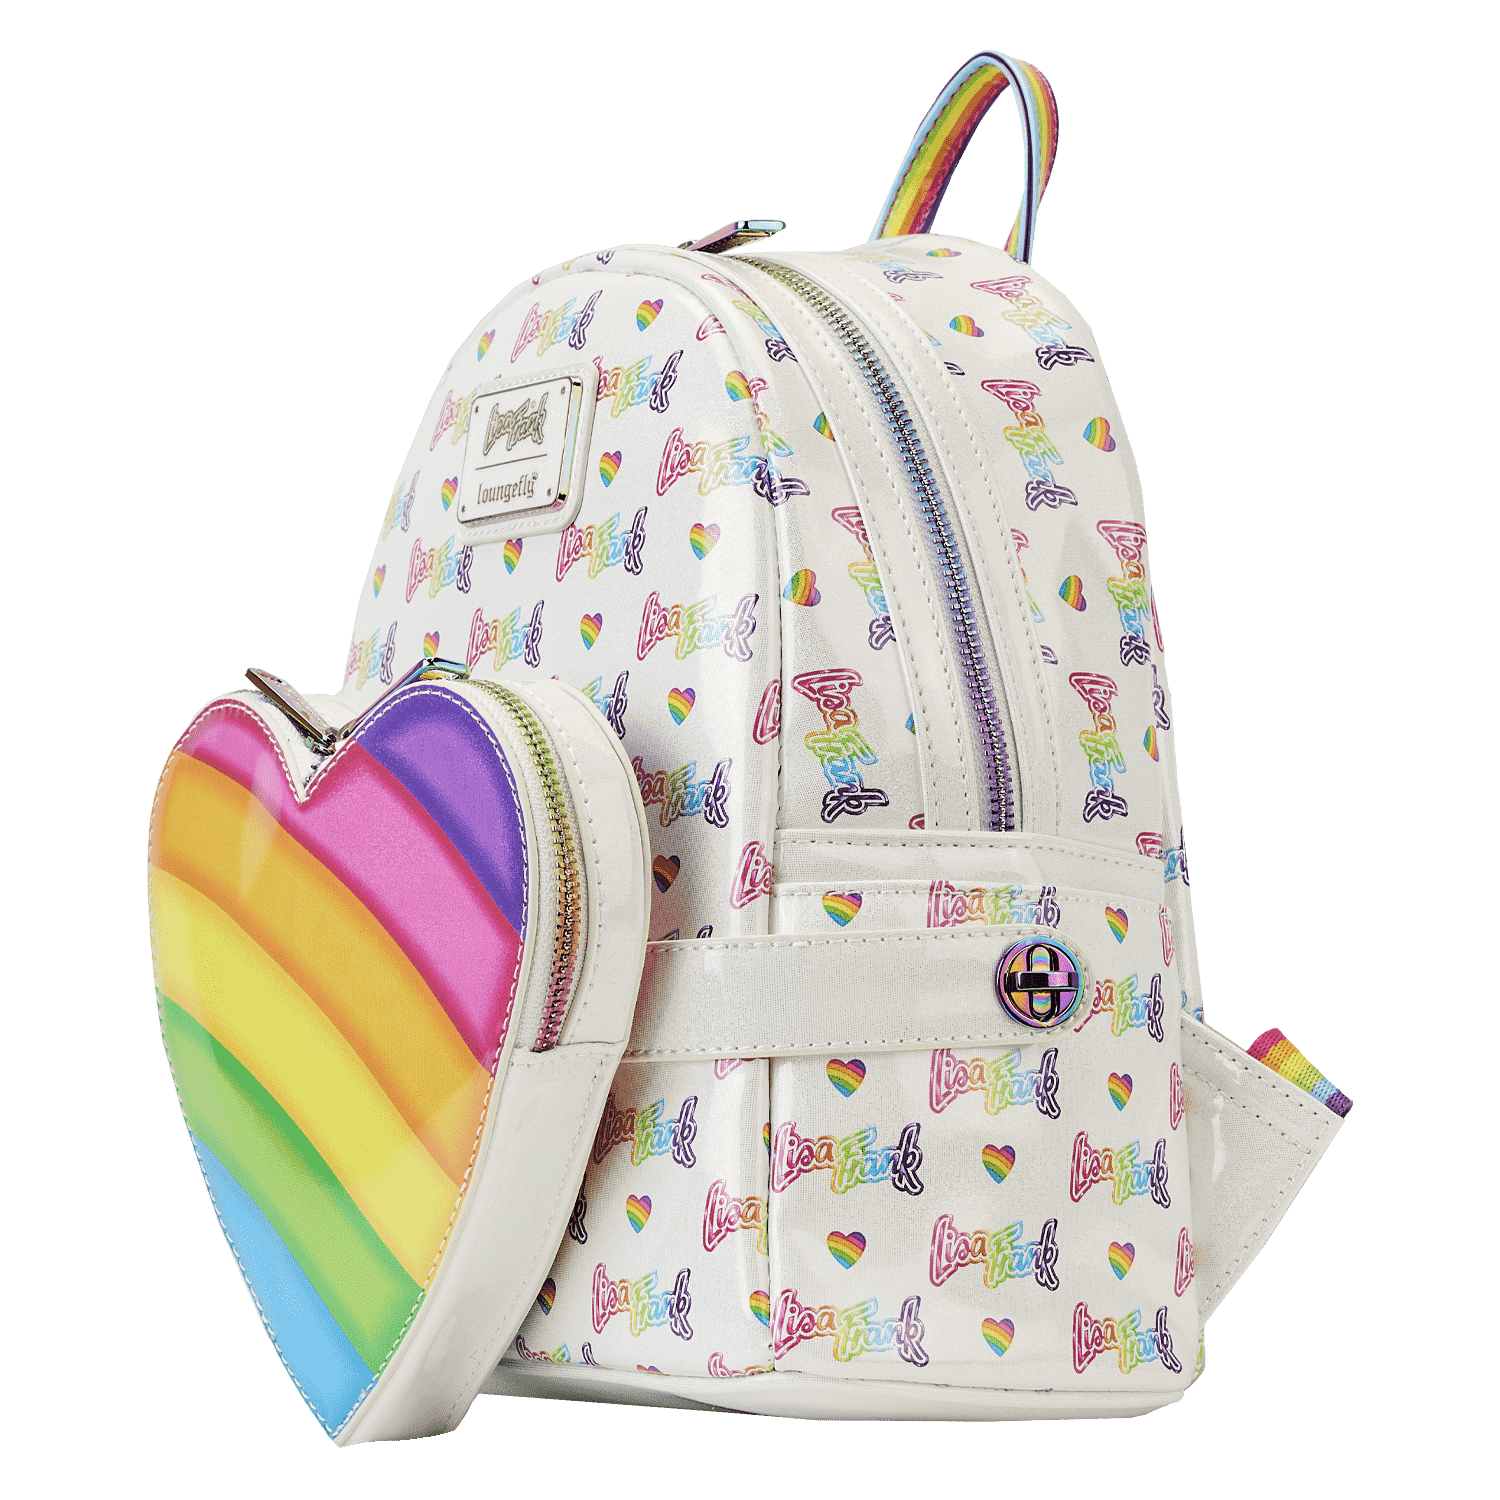 Buy Lisa Frank Rainbow Heart Mini Backpack with Waist Bag at Loungefly.